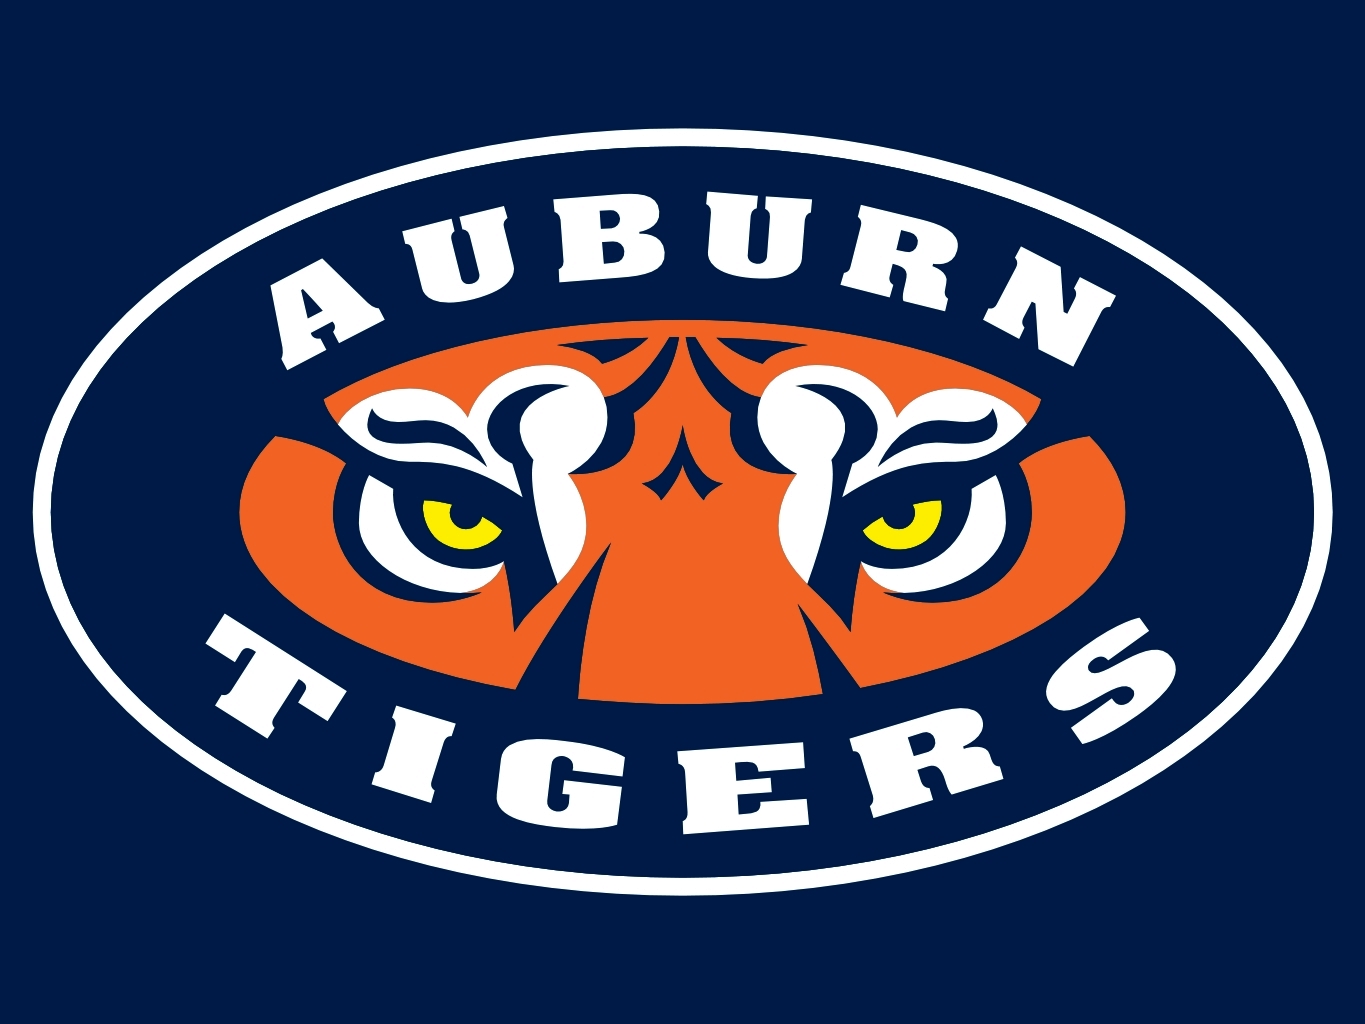 Auburn Tigers Logos and Images httpwwwrteamsitecomleague